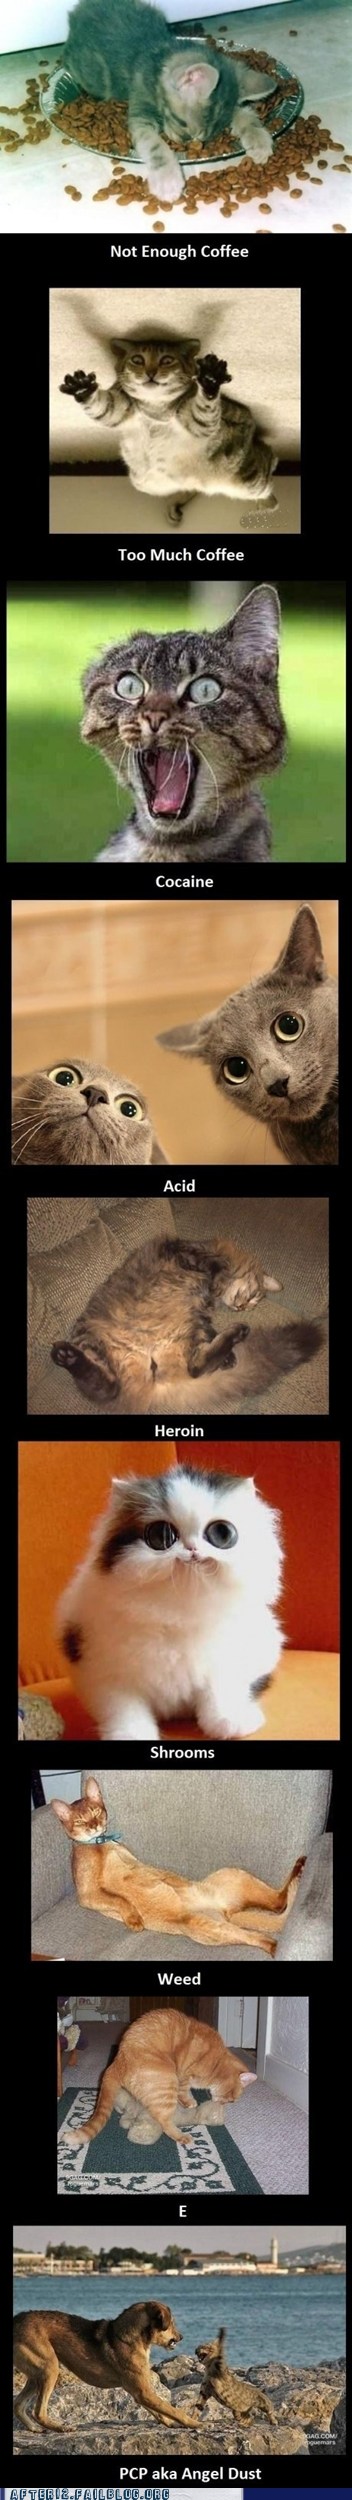 weed, acid, cocaine...gotta love cats